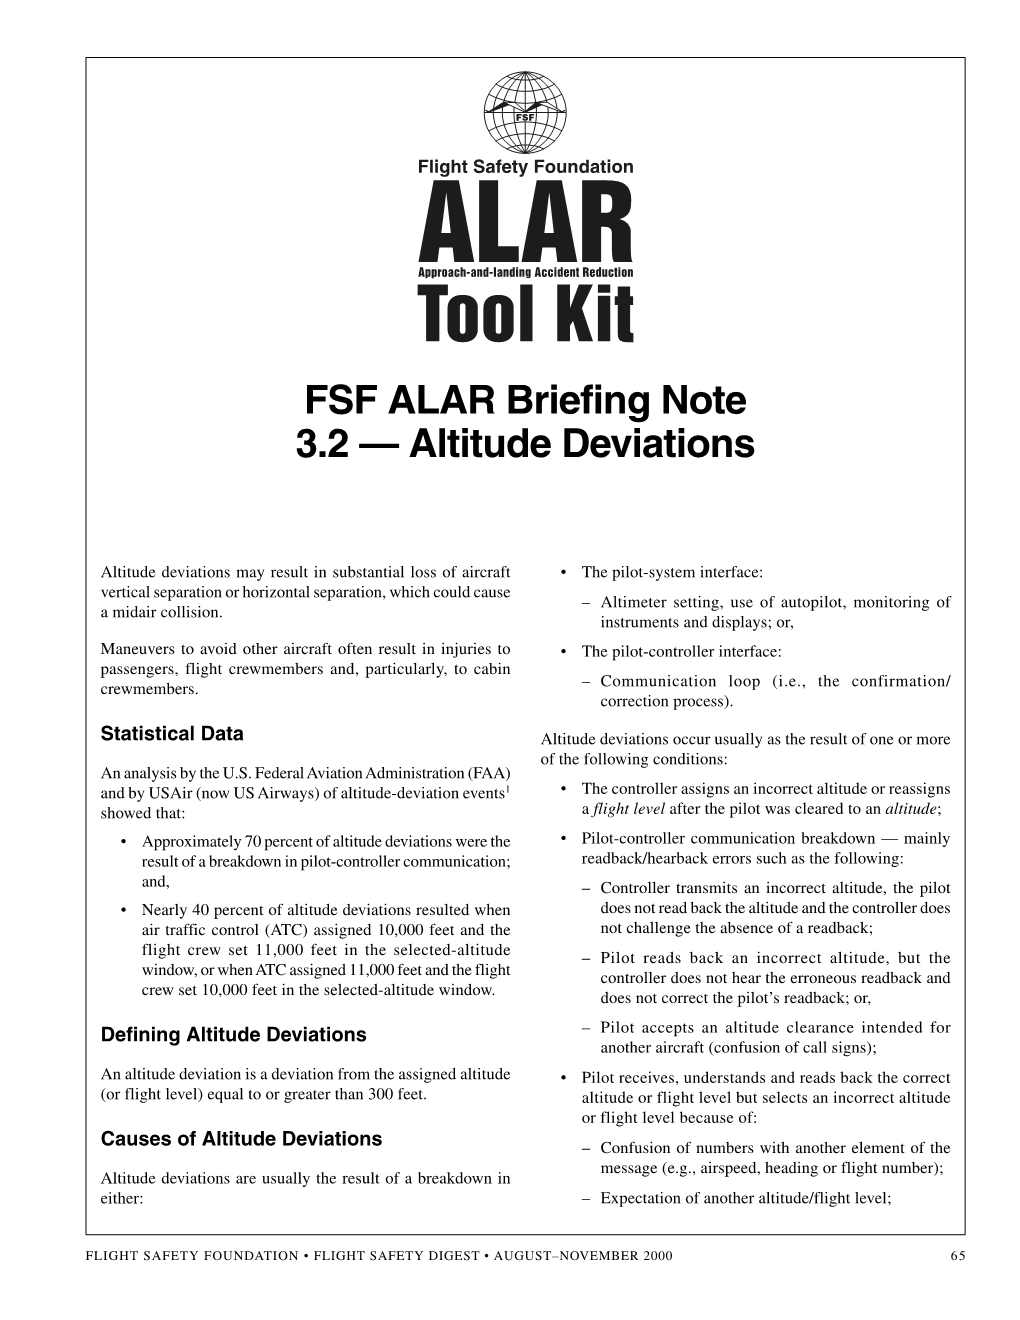 FSF ALAR Briefing Note 3.2 -- Altitude Deviations